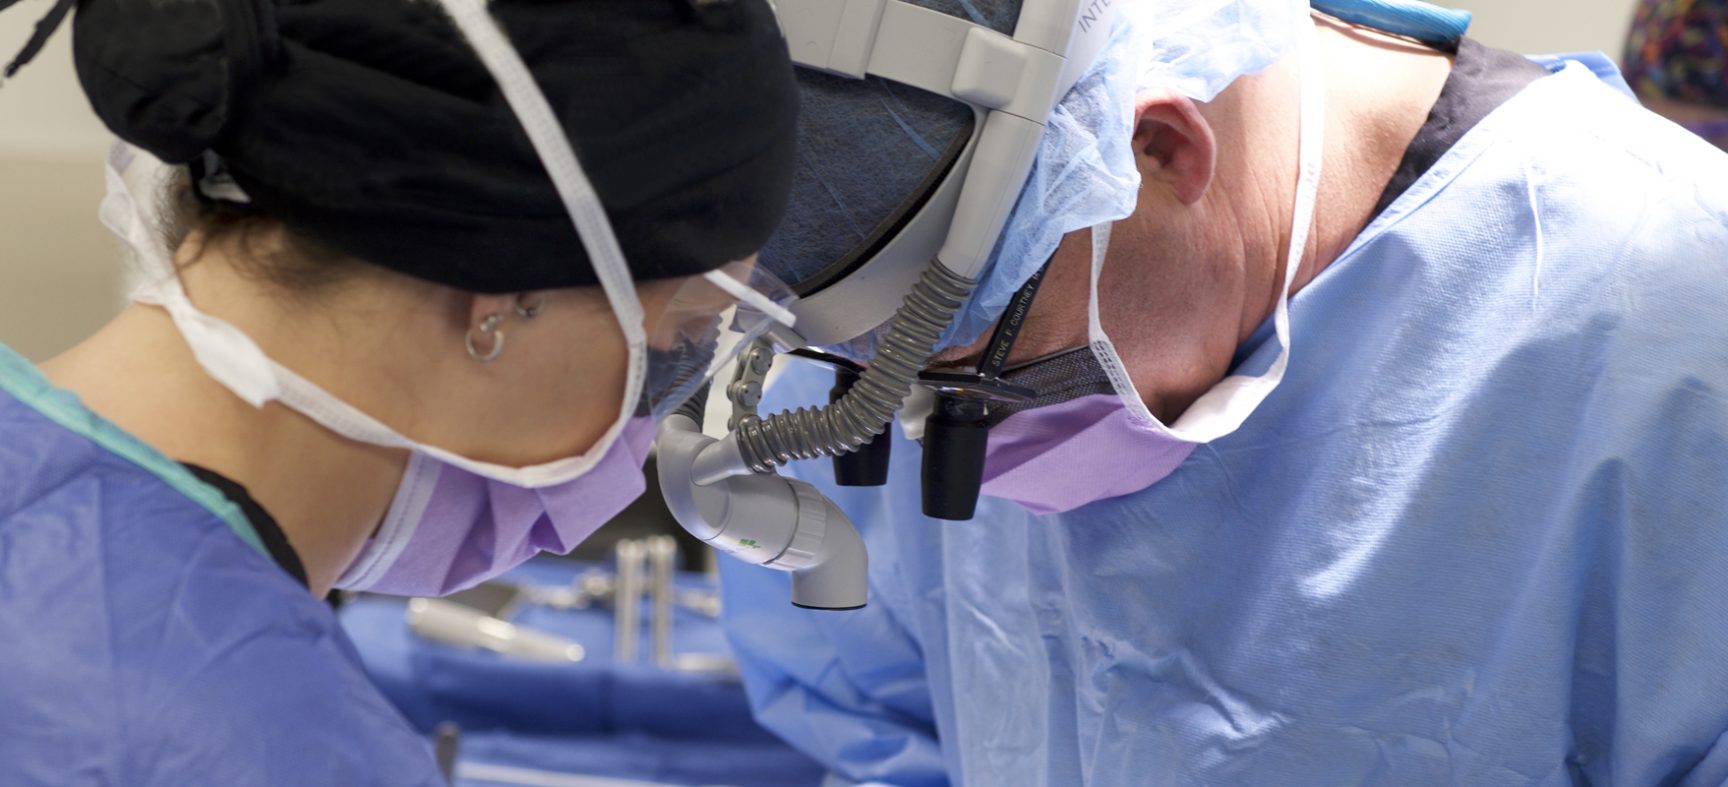 What makes Minimally Invasive Spine Surgery Minimally Invasive?